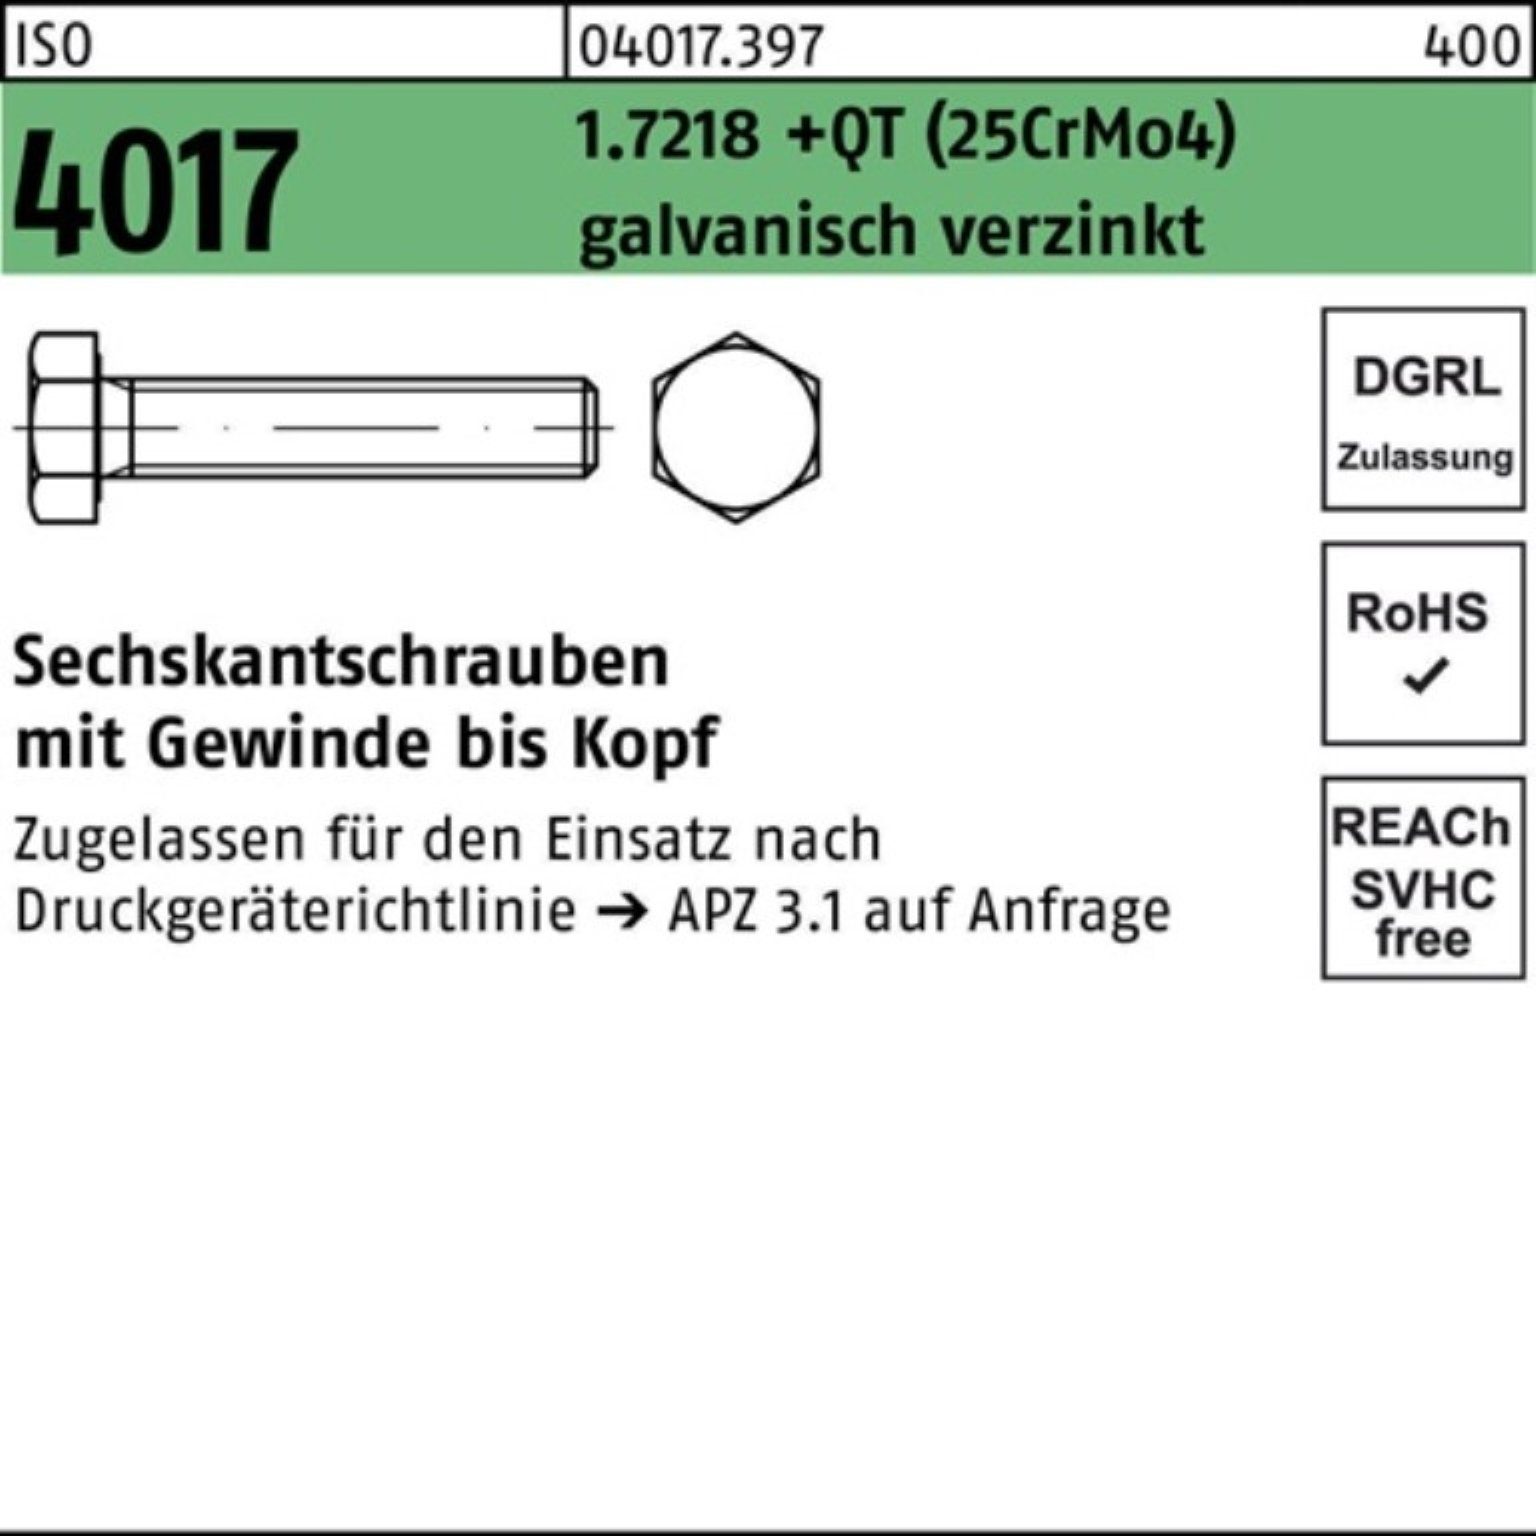 Bufab Sechskantschraube 100er Pack Sechskantschraube VG 4017 1.7218 ISO M27x110 (25CrMo4) +QT